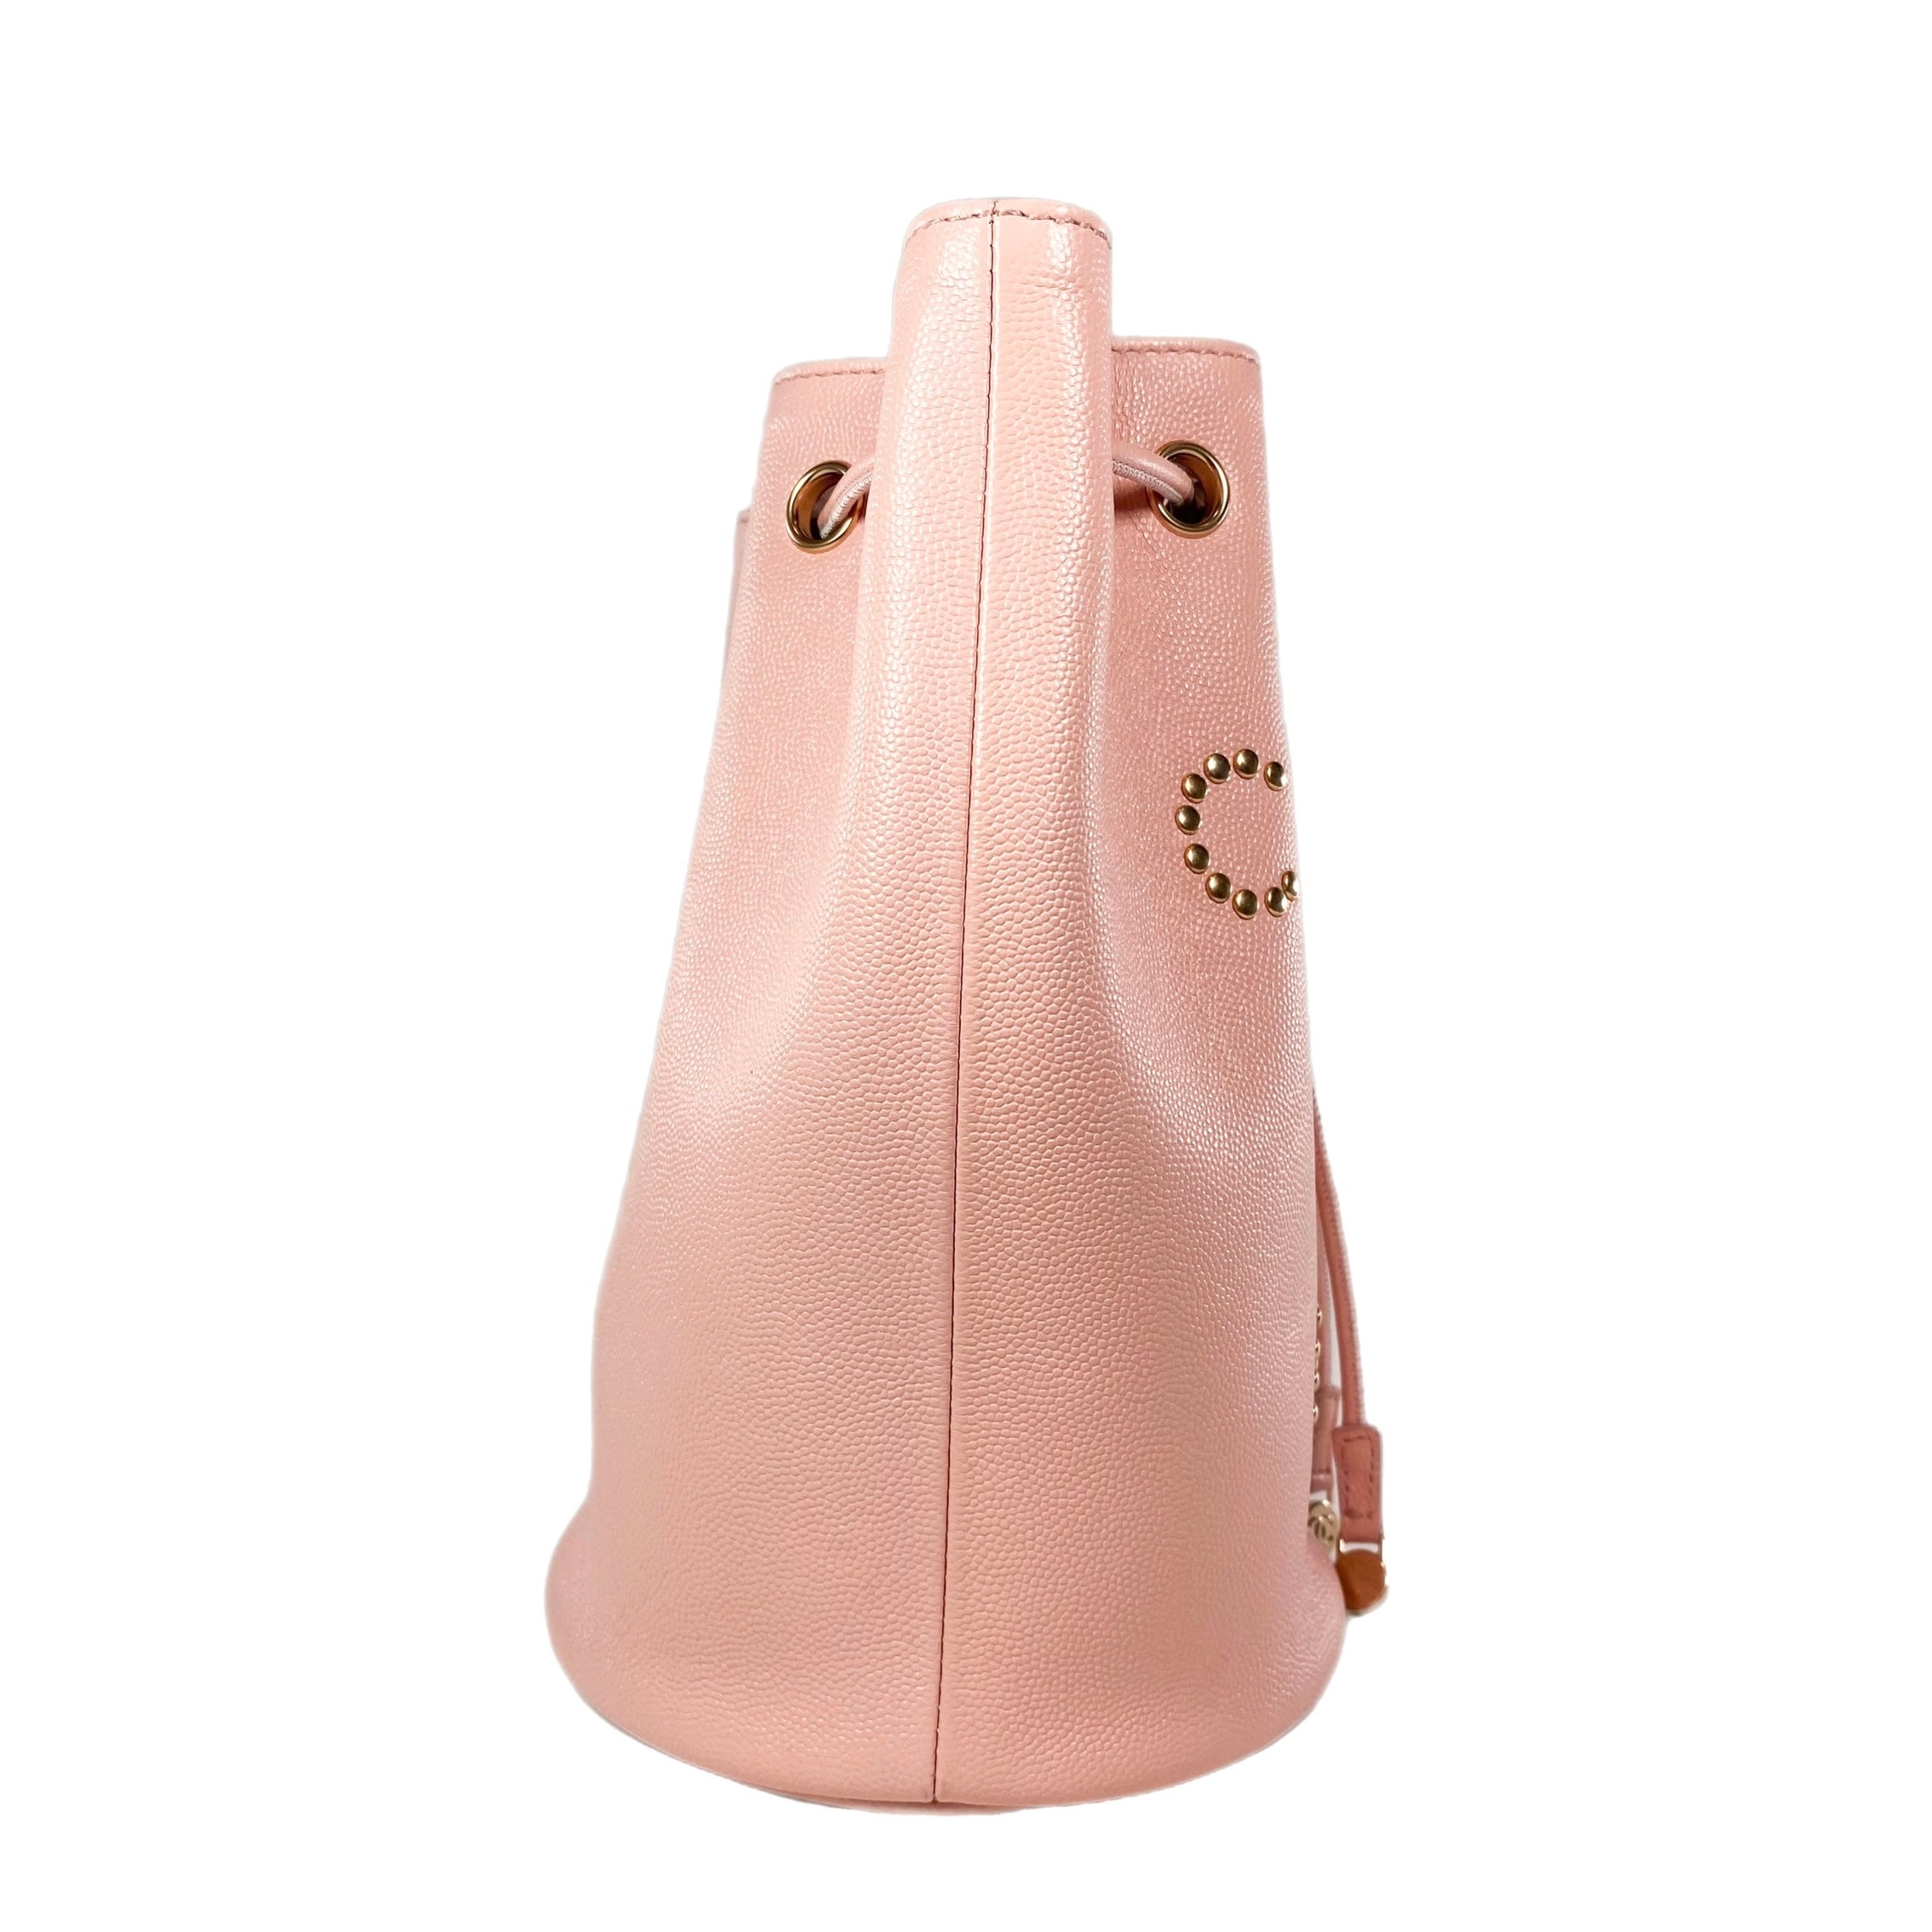 Chanel Light Pink Caviar Deauville Drawstring Bucket Bag